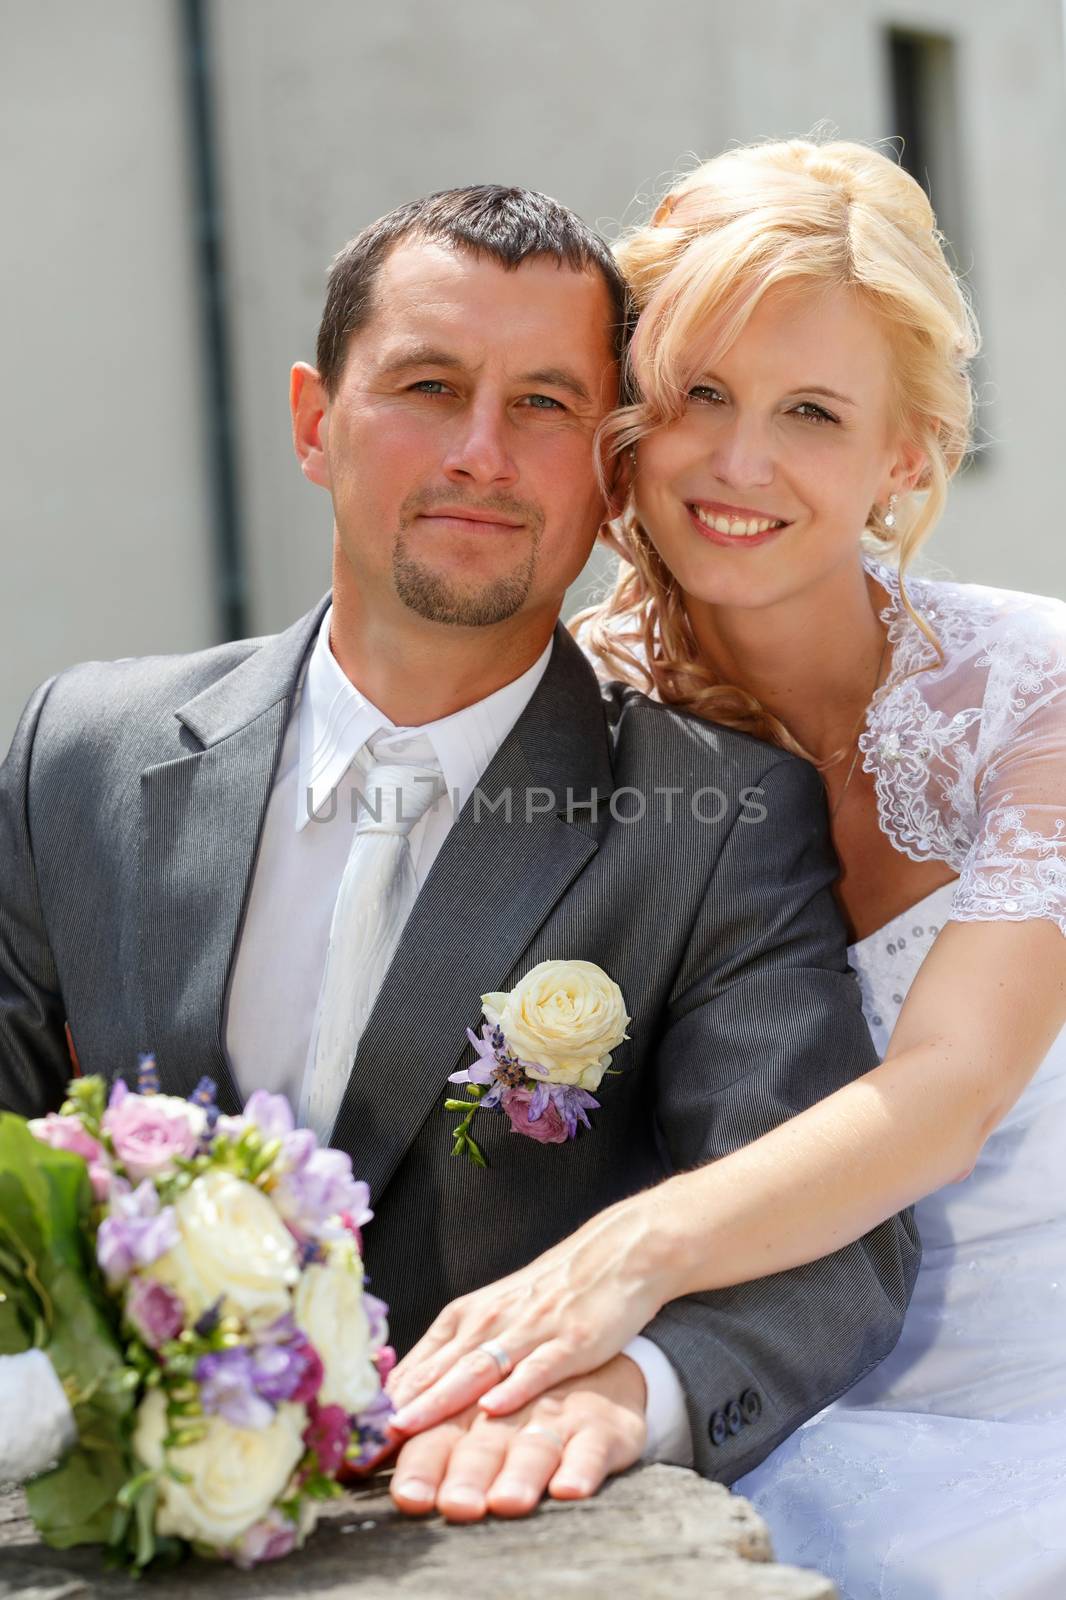 beautiful young wedding couple by artush